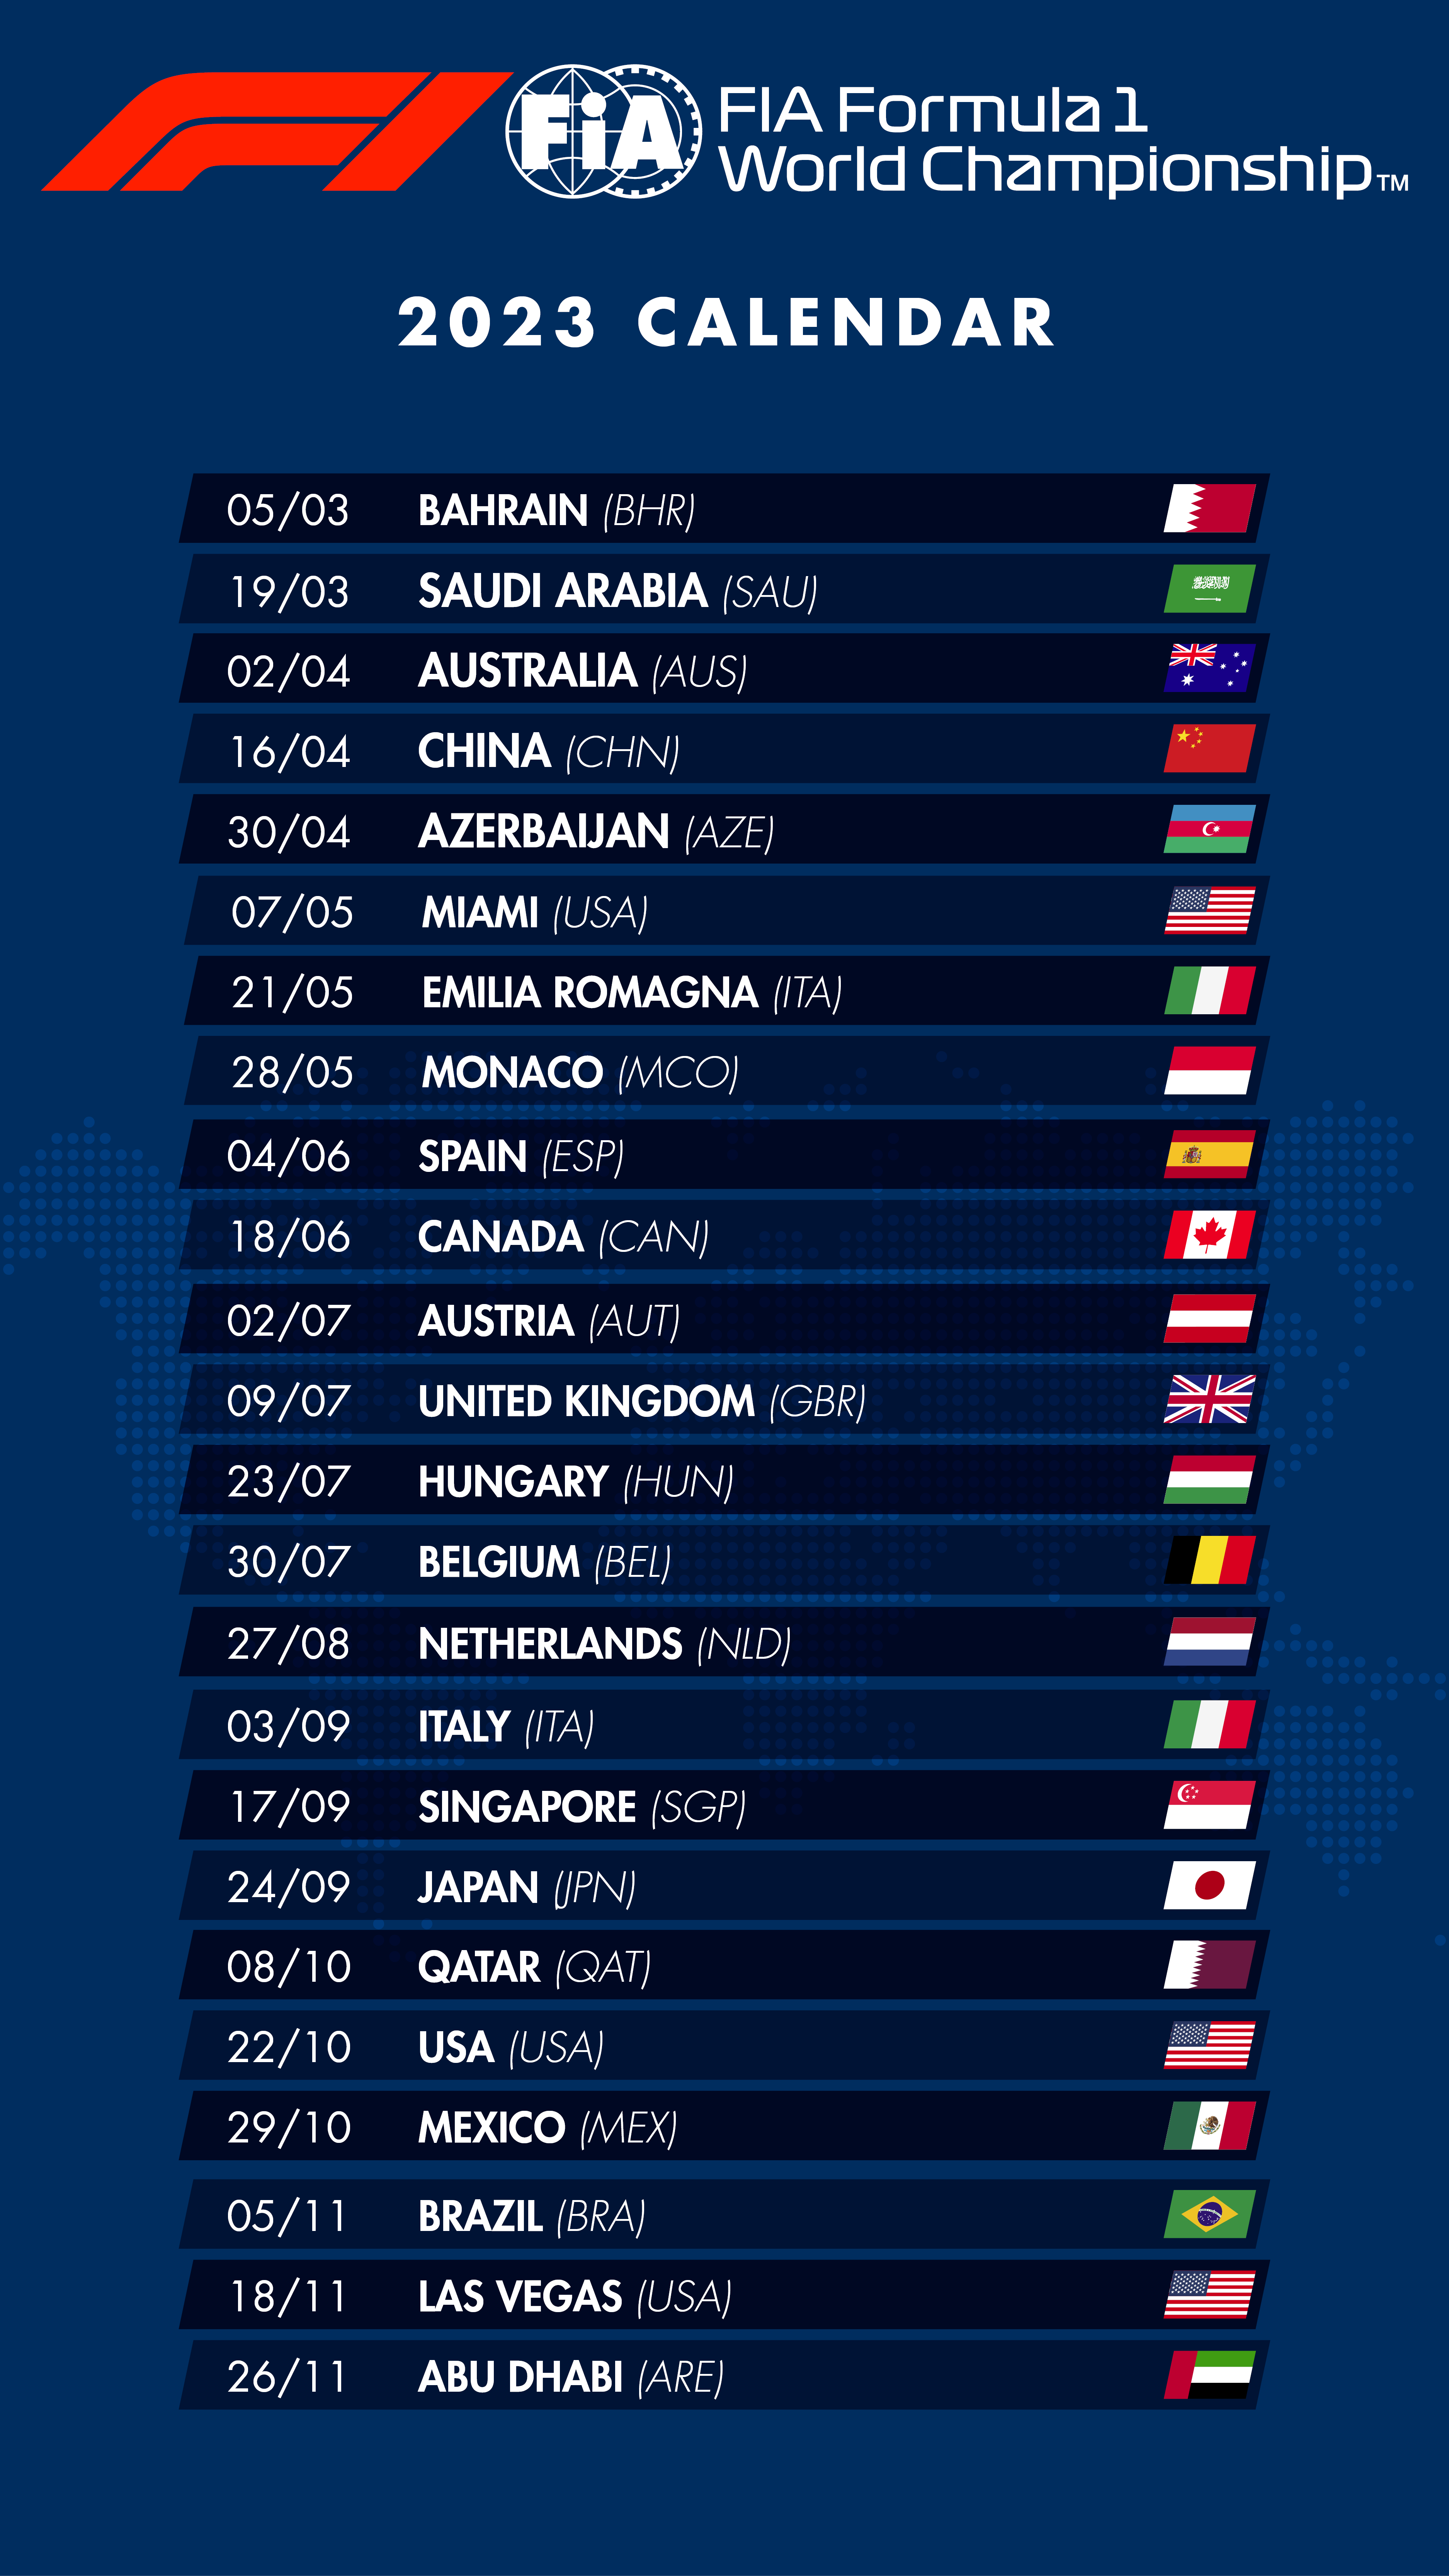 2023-fia-formula-one-world-championship-calendar-approved-by-wmsc-federation-internationale-de